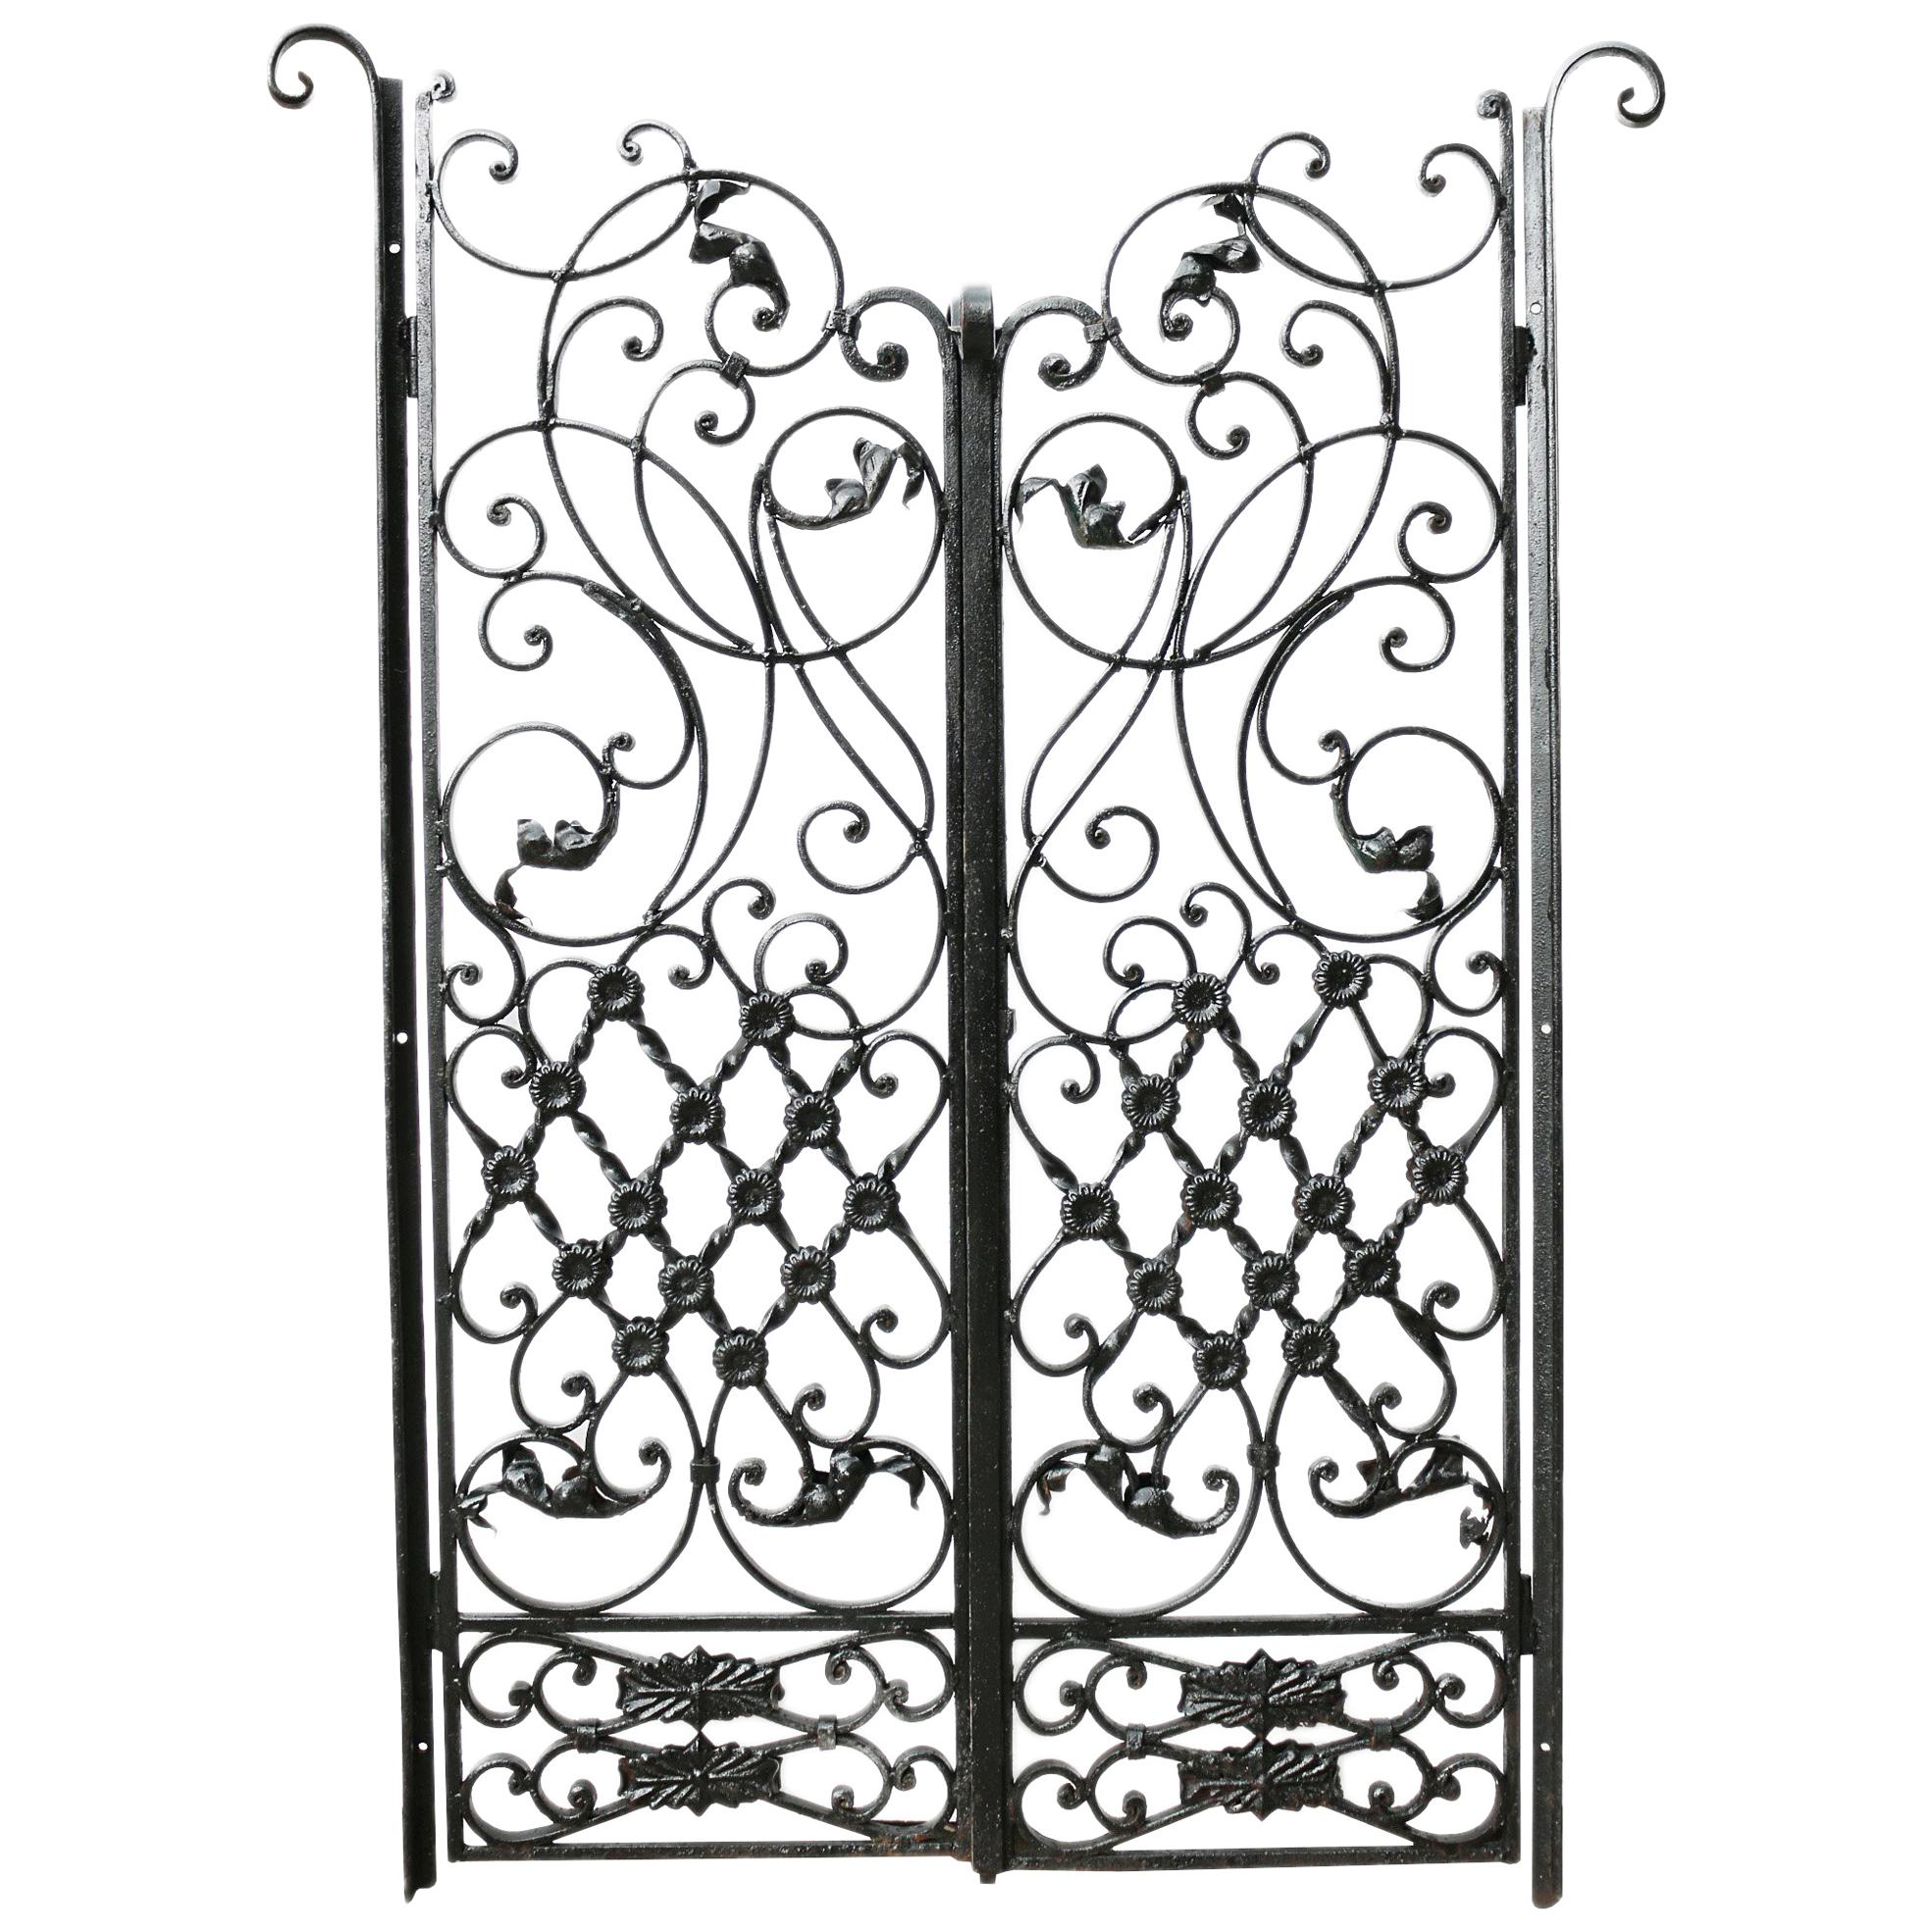 Pair of Reclaimed Iron Garden Gates